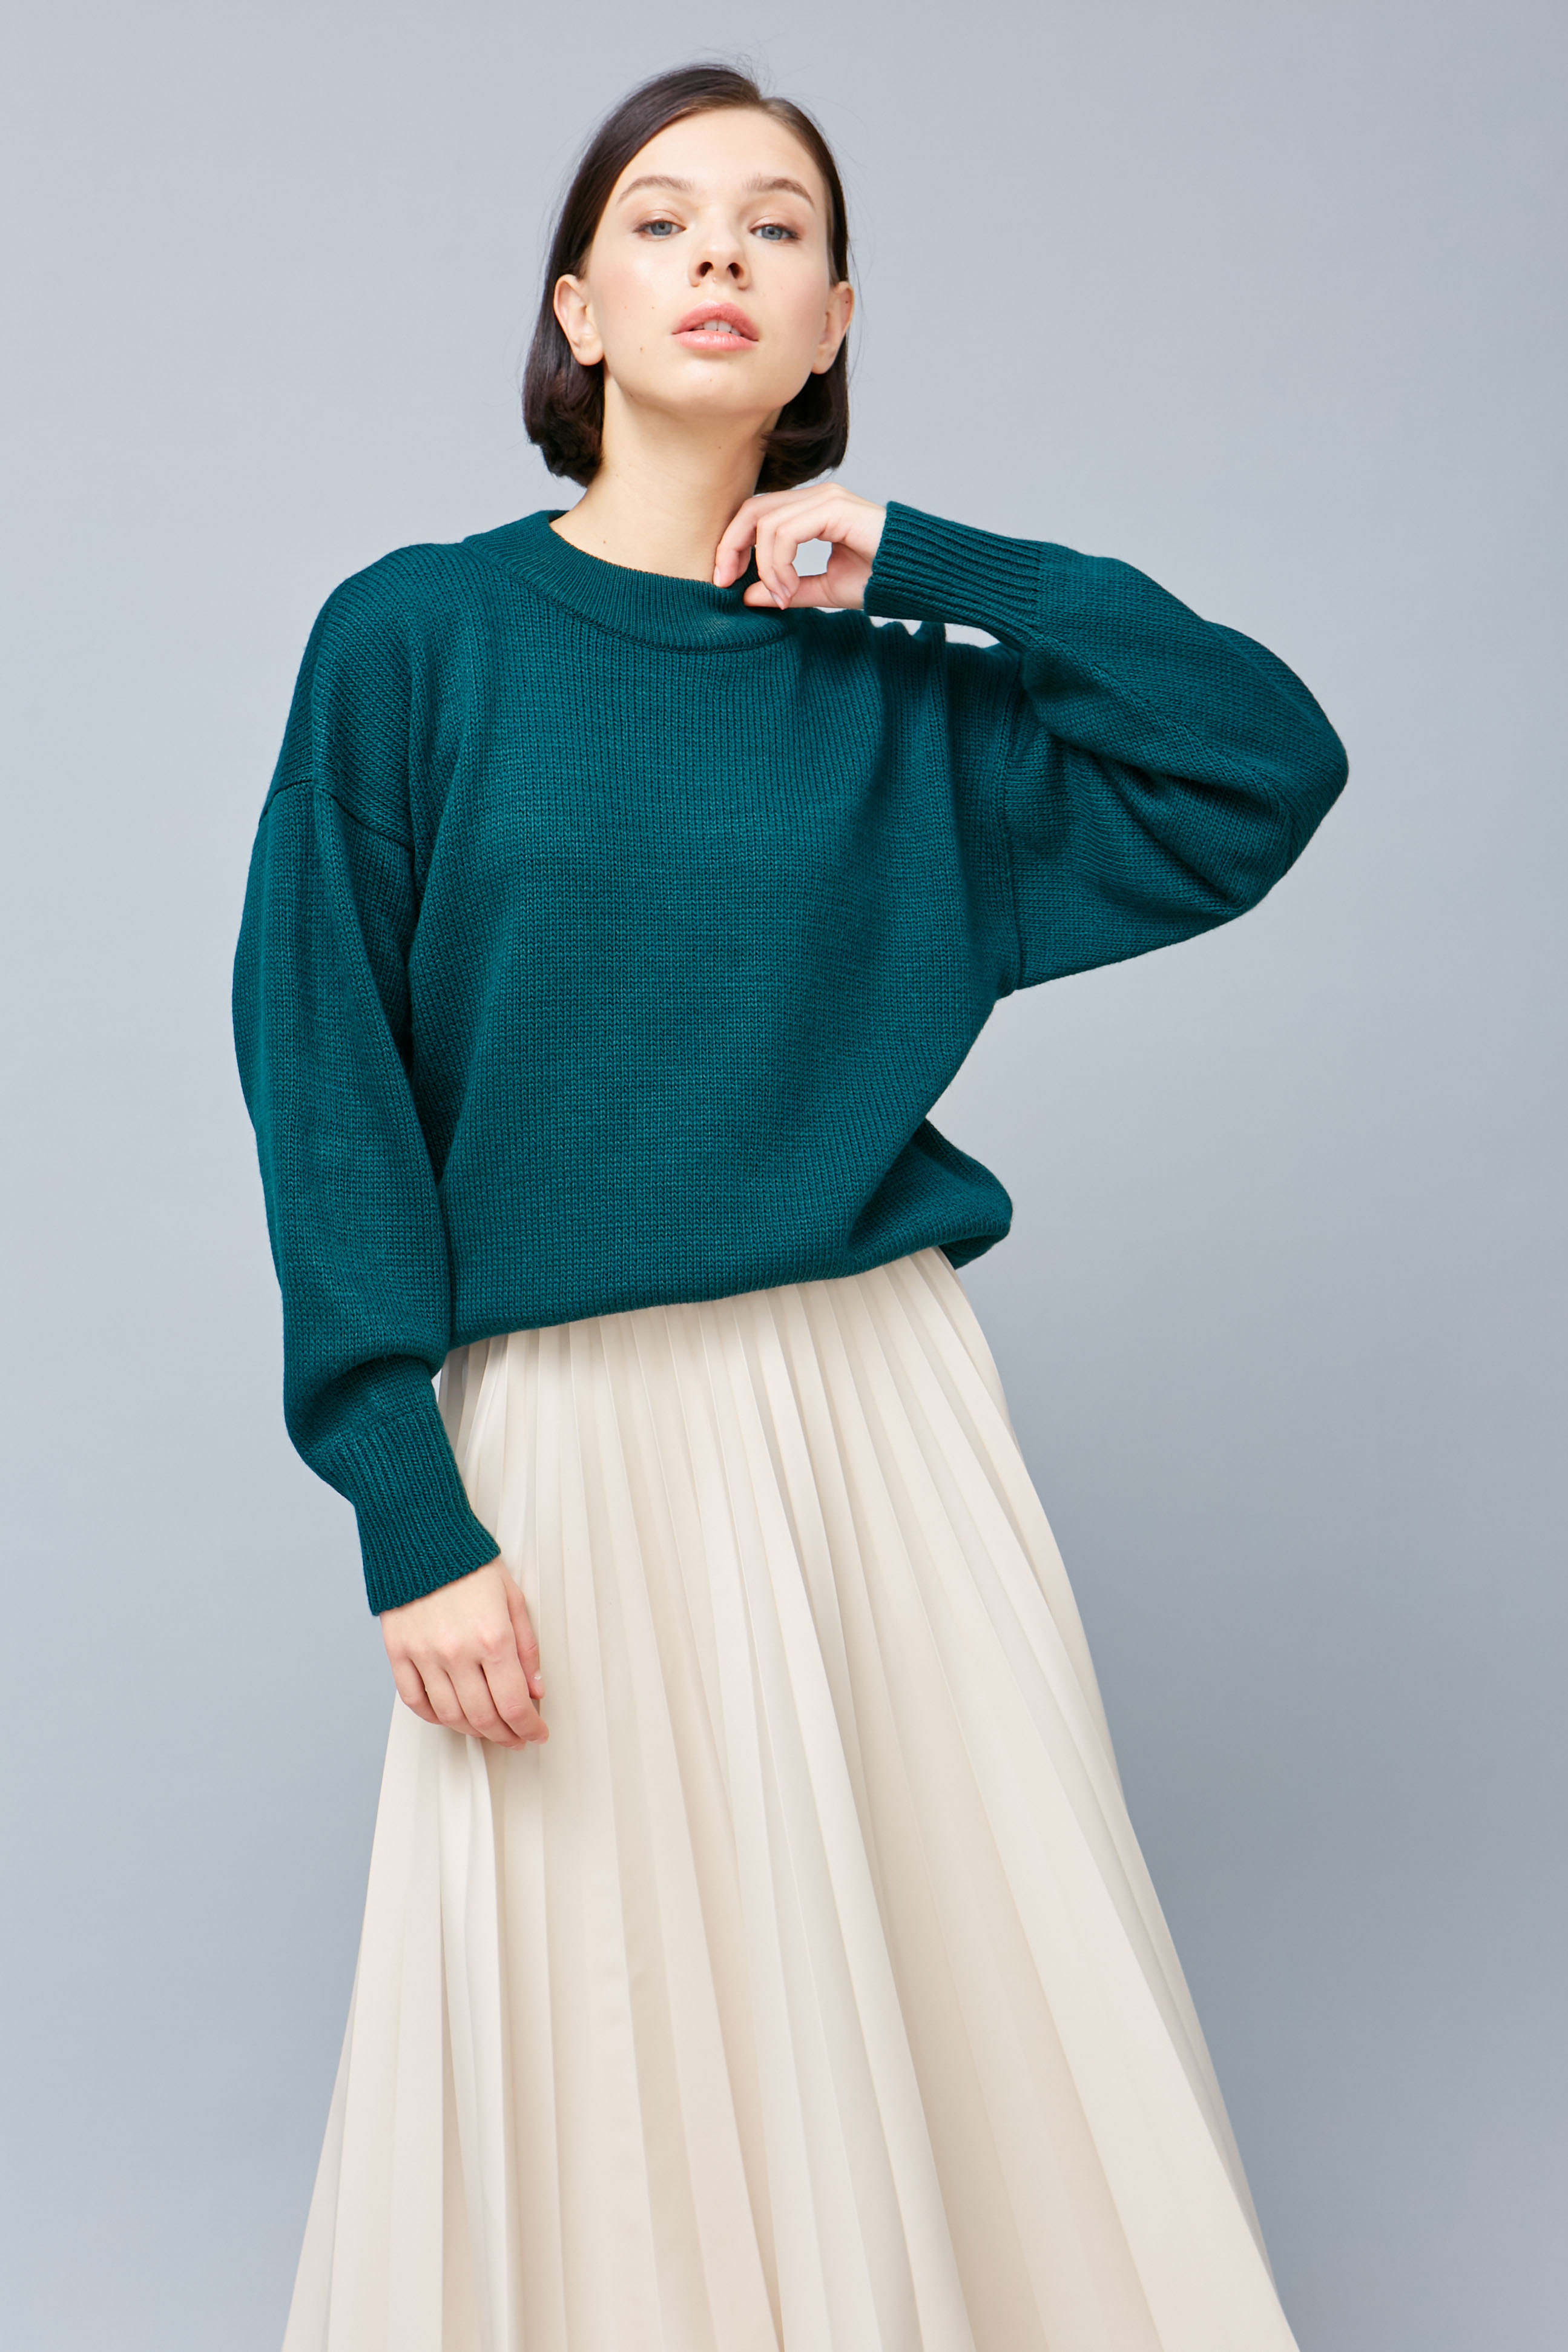 Green knit sweater, photo 1